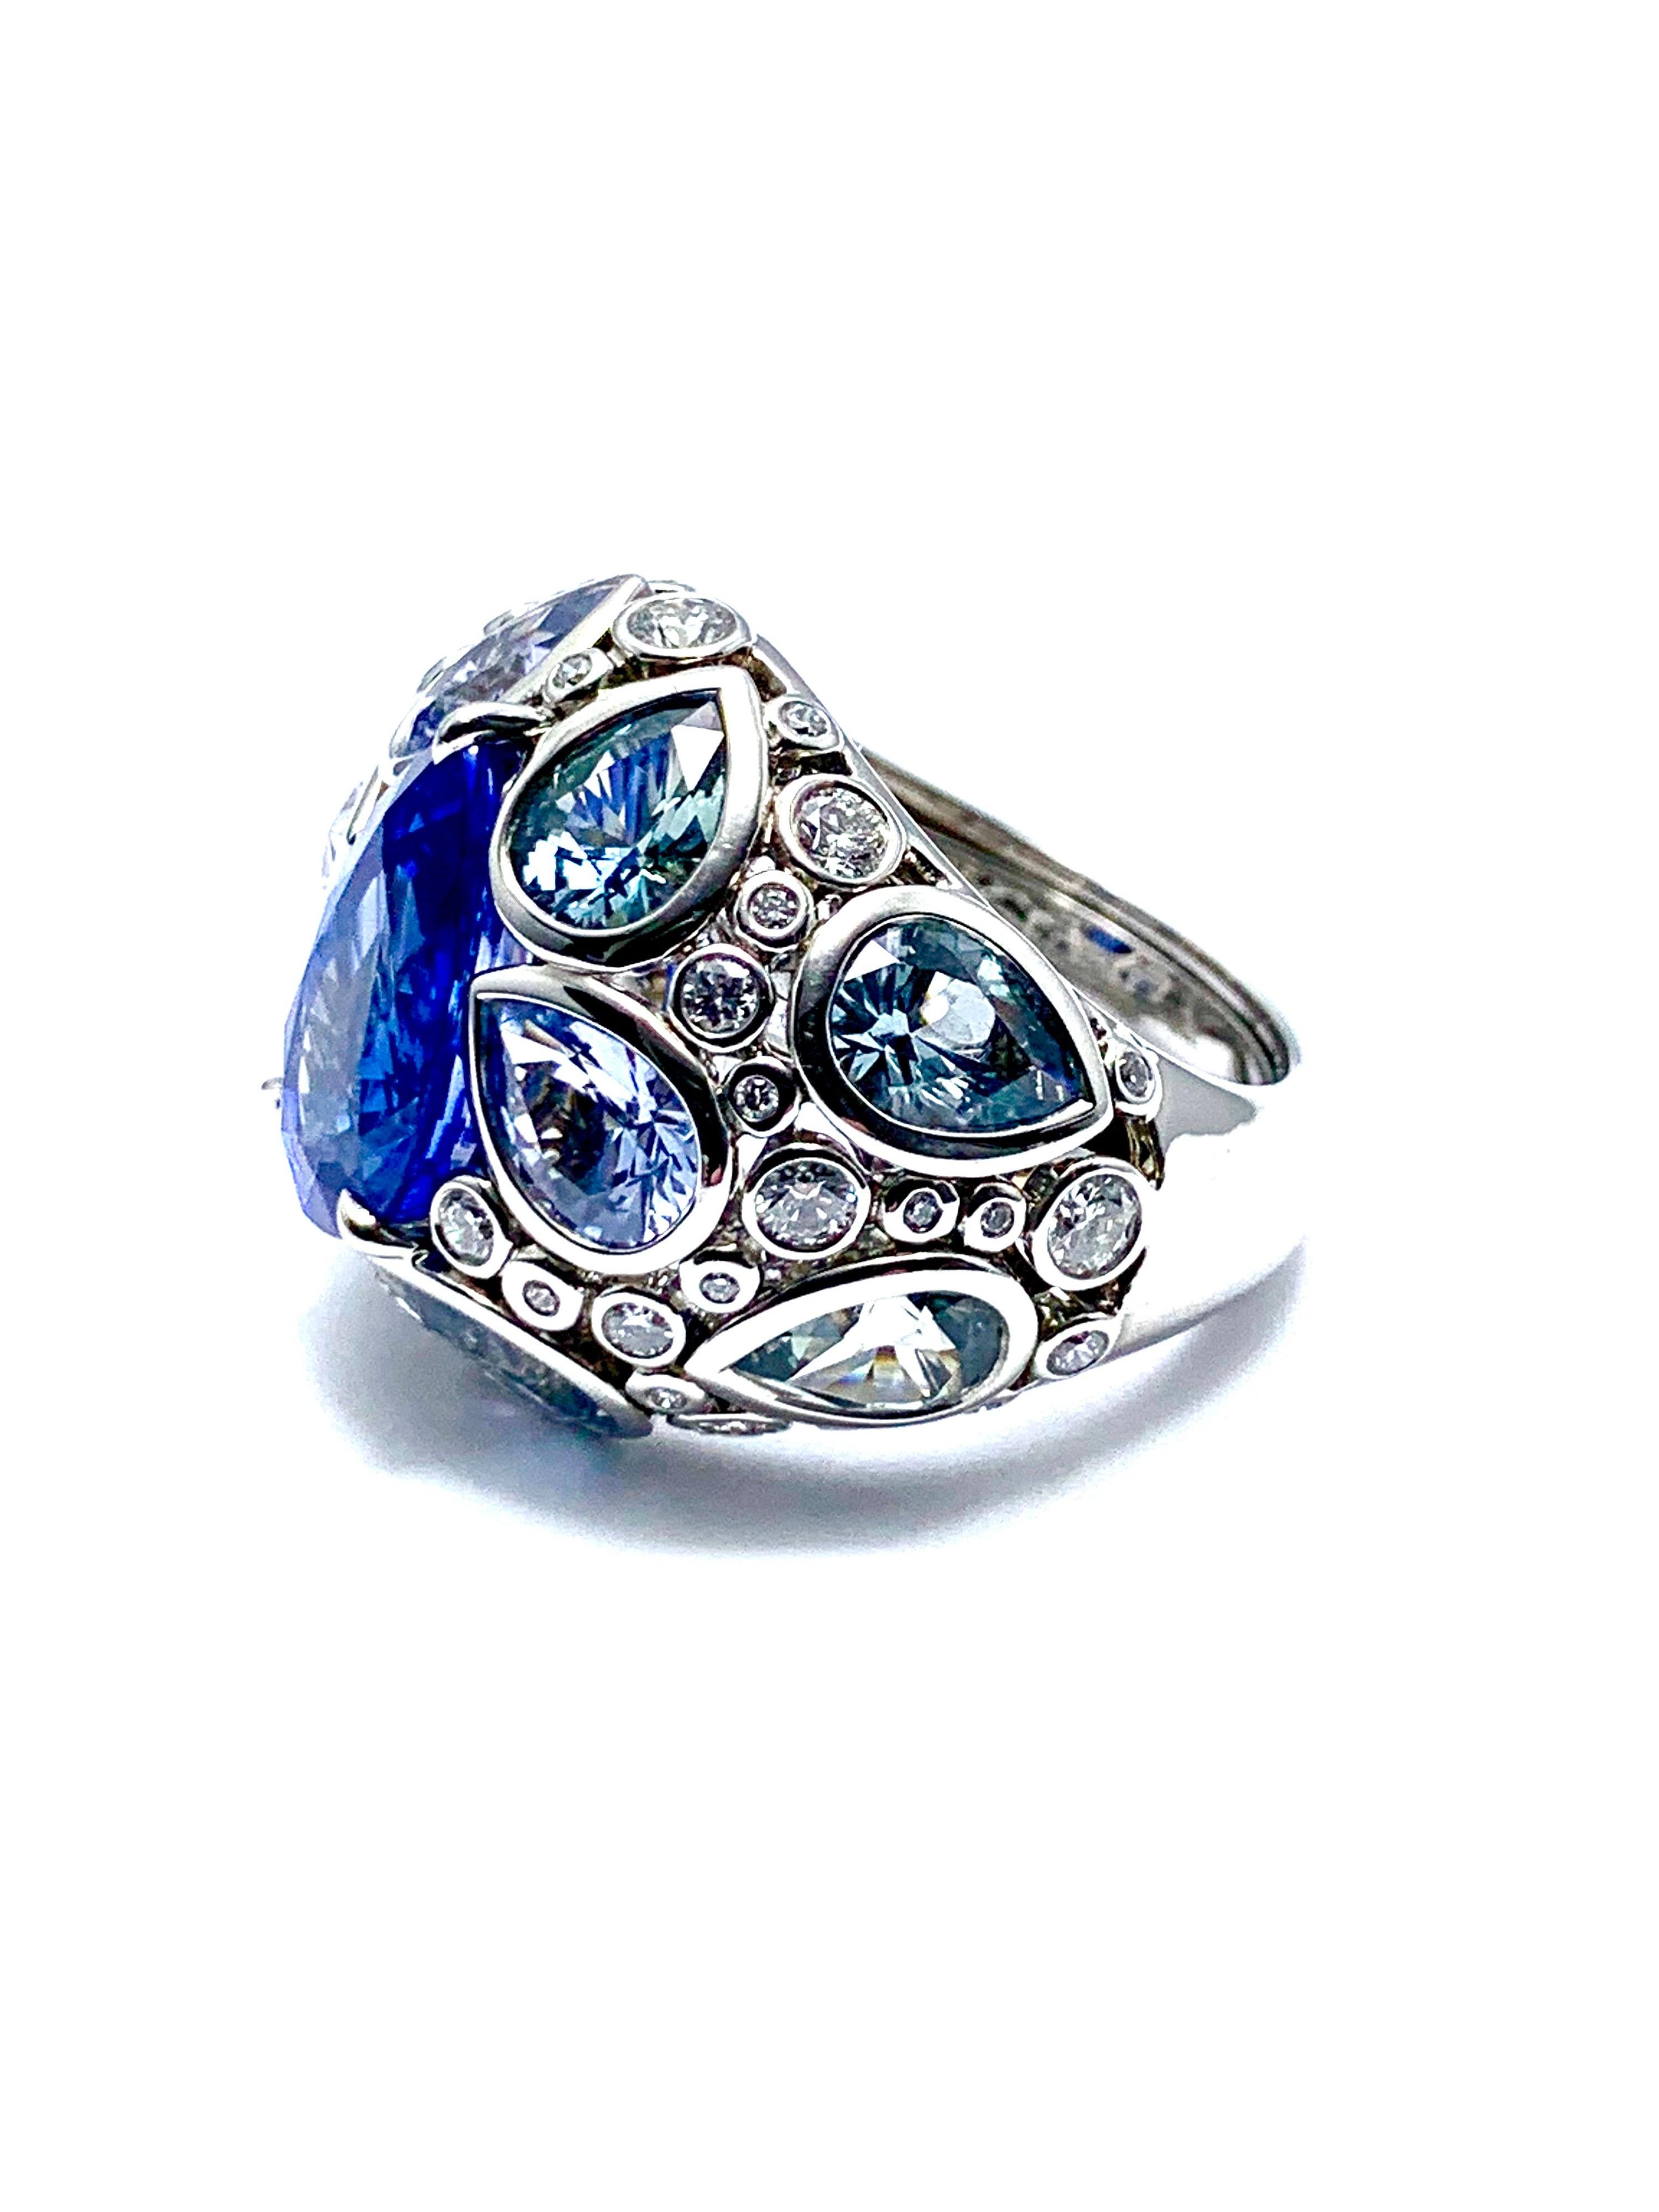 Pear Cut Robert Procop De La Vie 4.58 Carat Sapphire and Diamond Platinum Ring